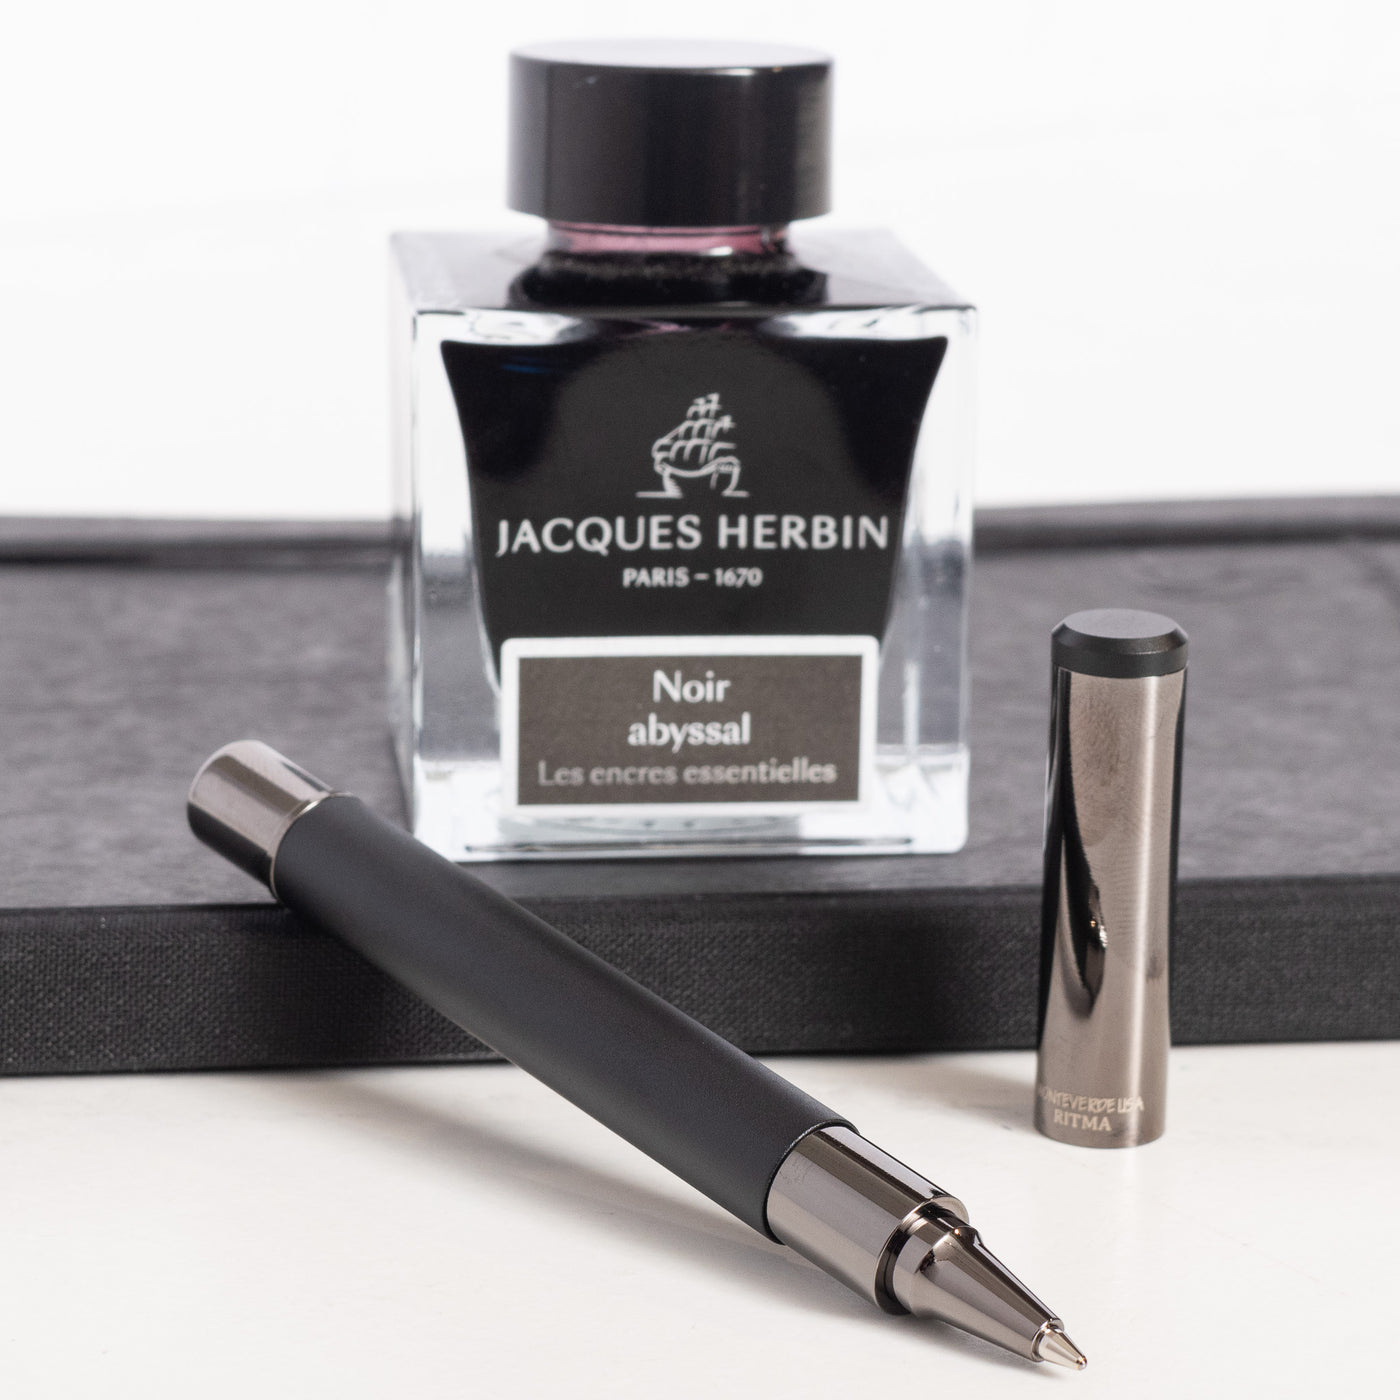 Monteverde Ritma Gala Black Convertible Neck Pocket Ballpoint Pen